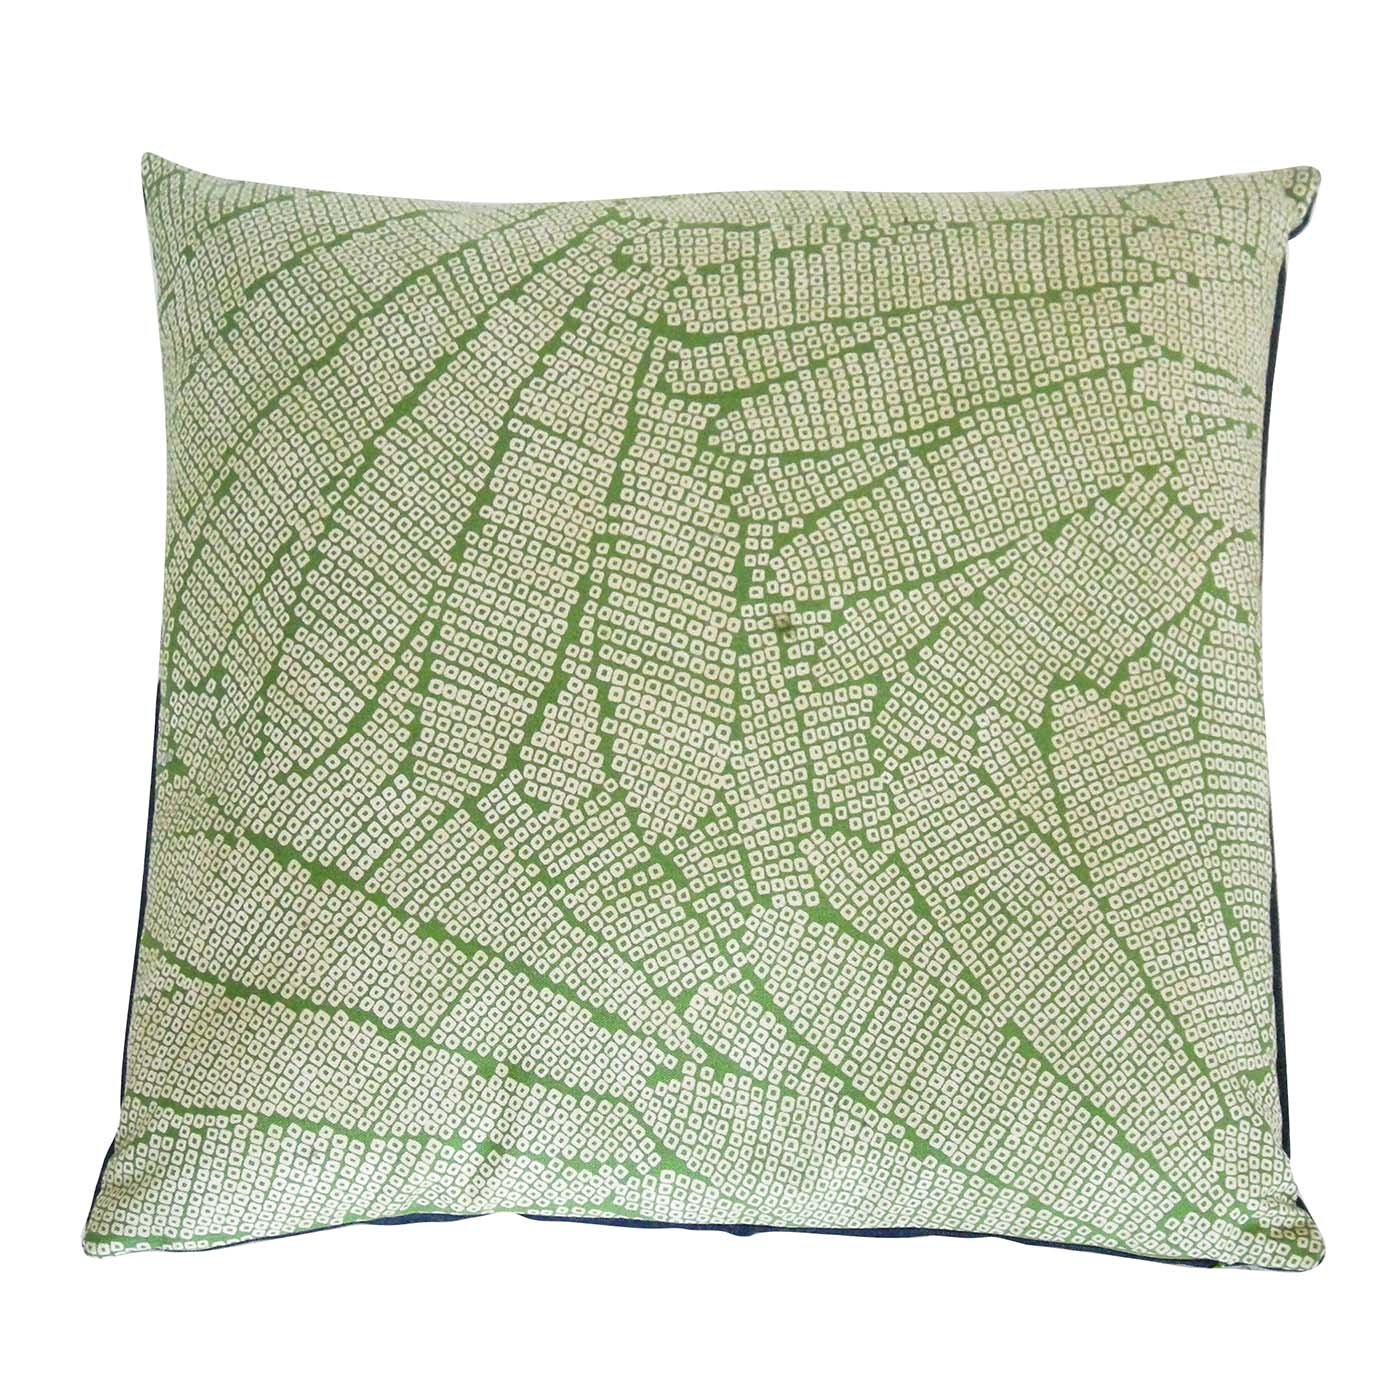 Big Danese Cushion in Green Cotton and Denim - Main view